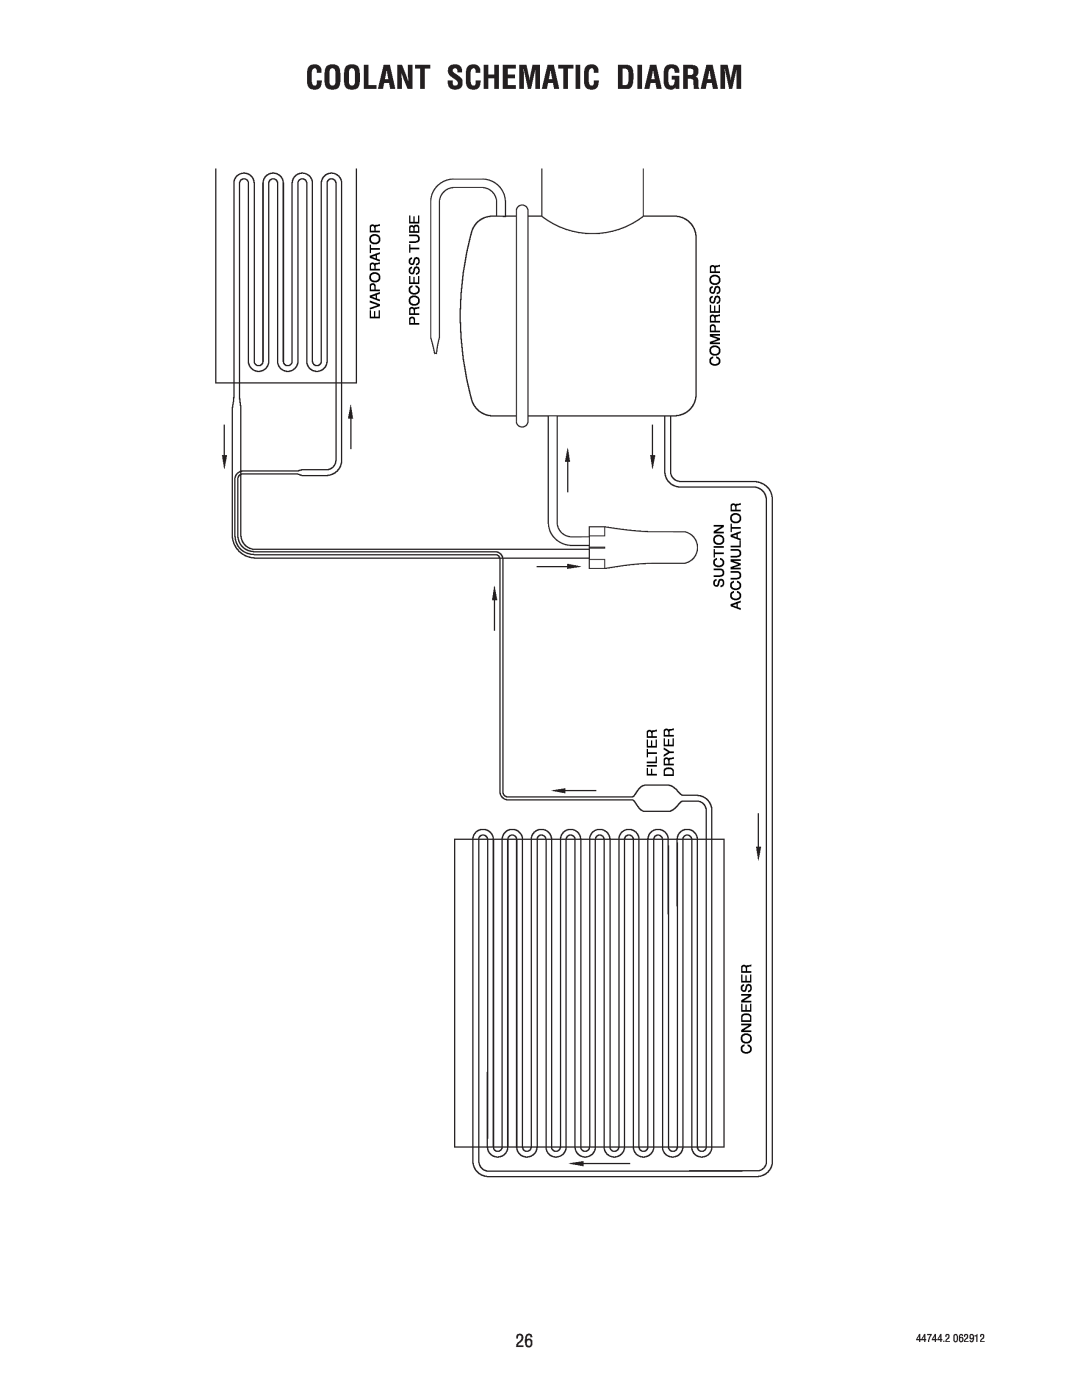 Bunn JDF-4S Coolant Schematic Diagram, Evaporator, Process Tube, Compressor, Accumulator Suction Dryer, Condenser, 44744.2 